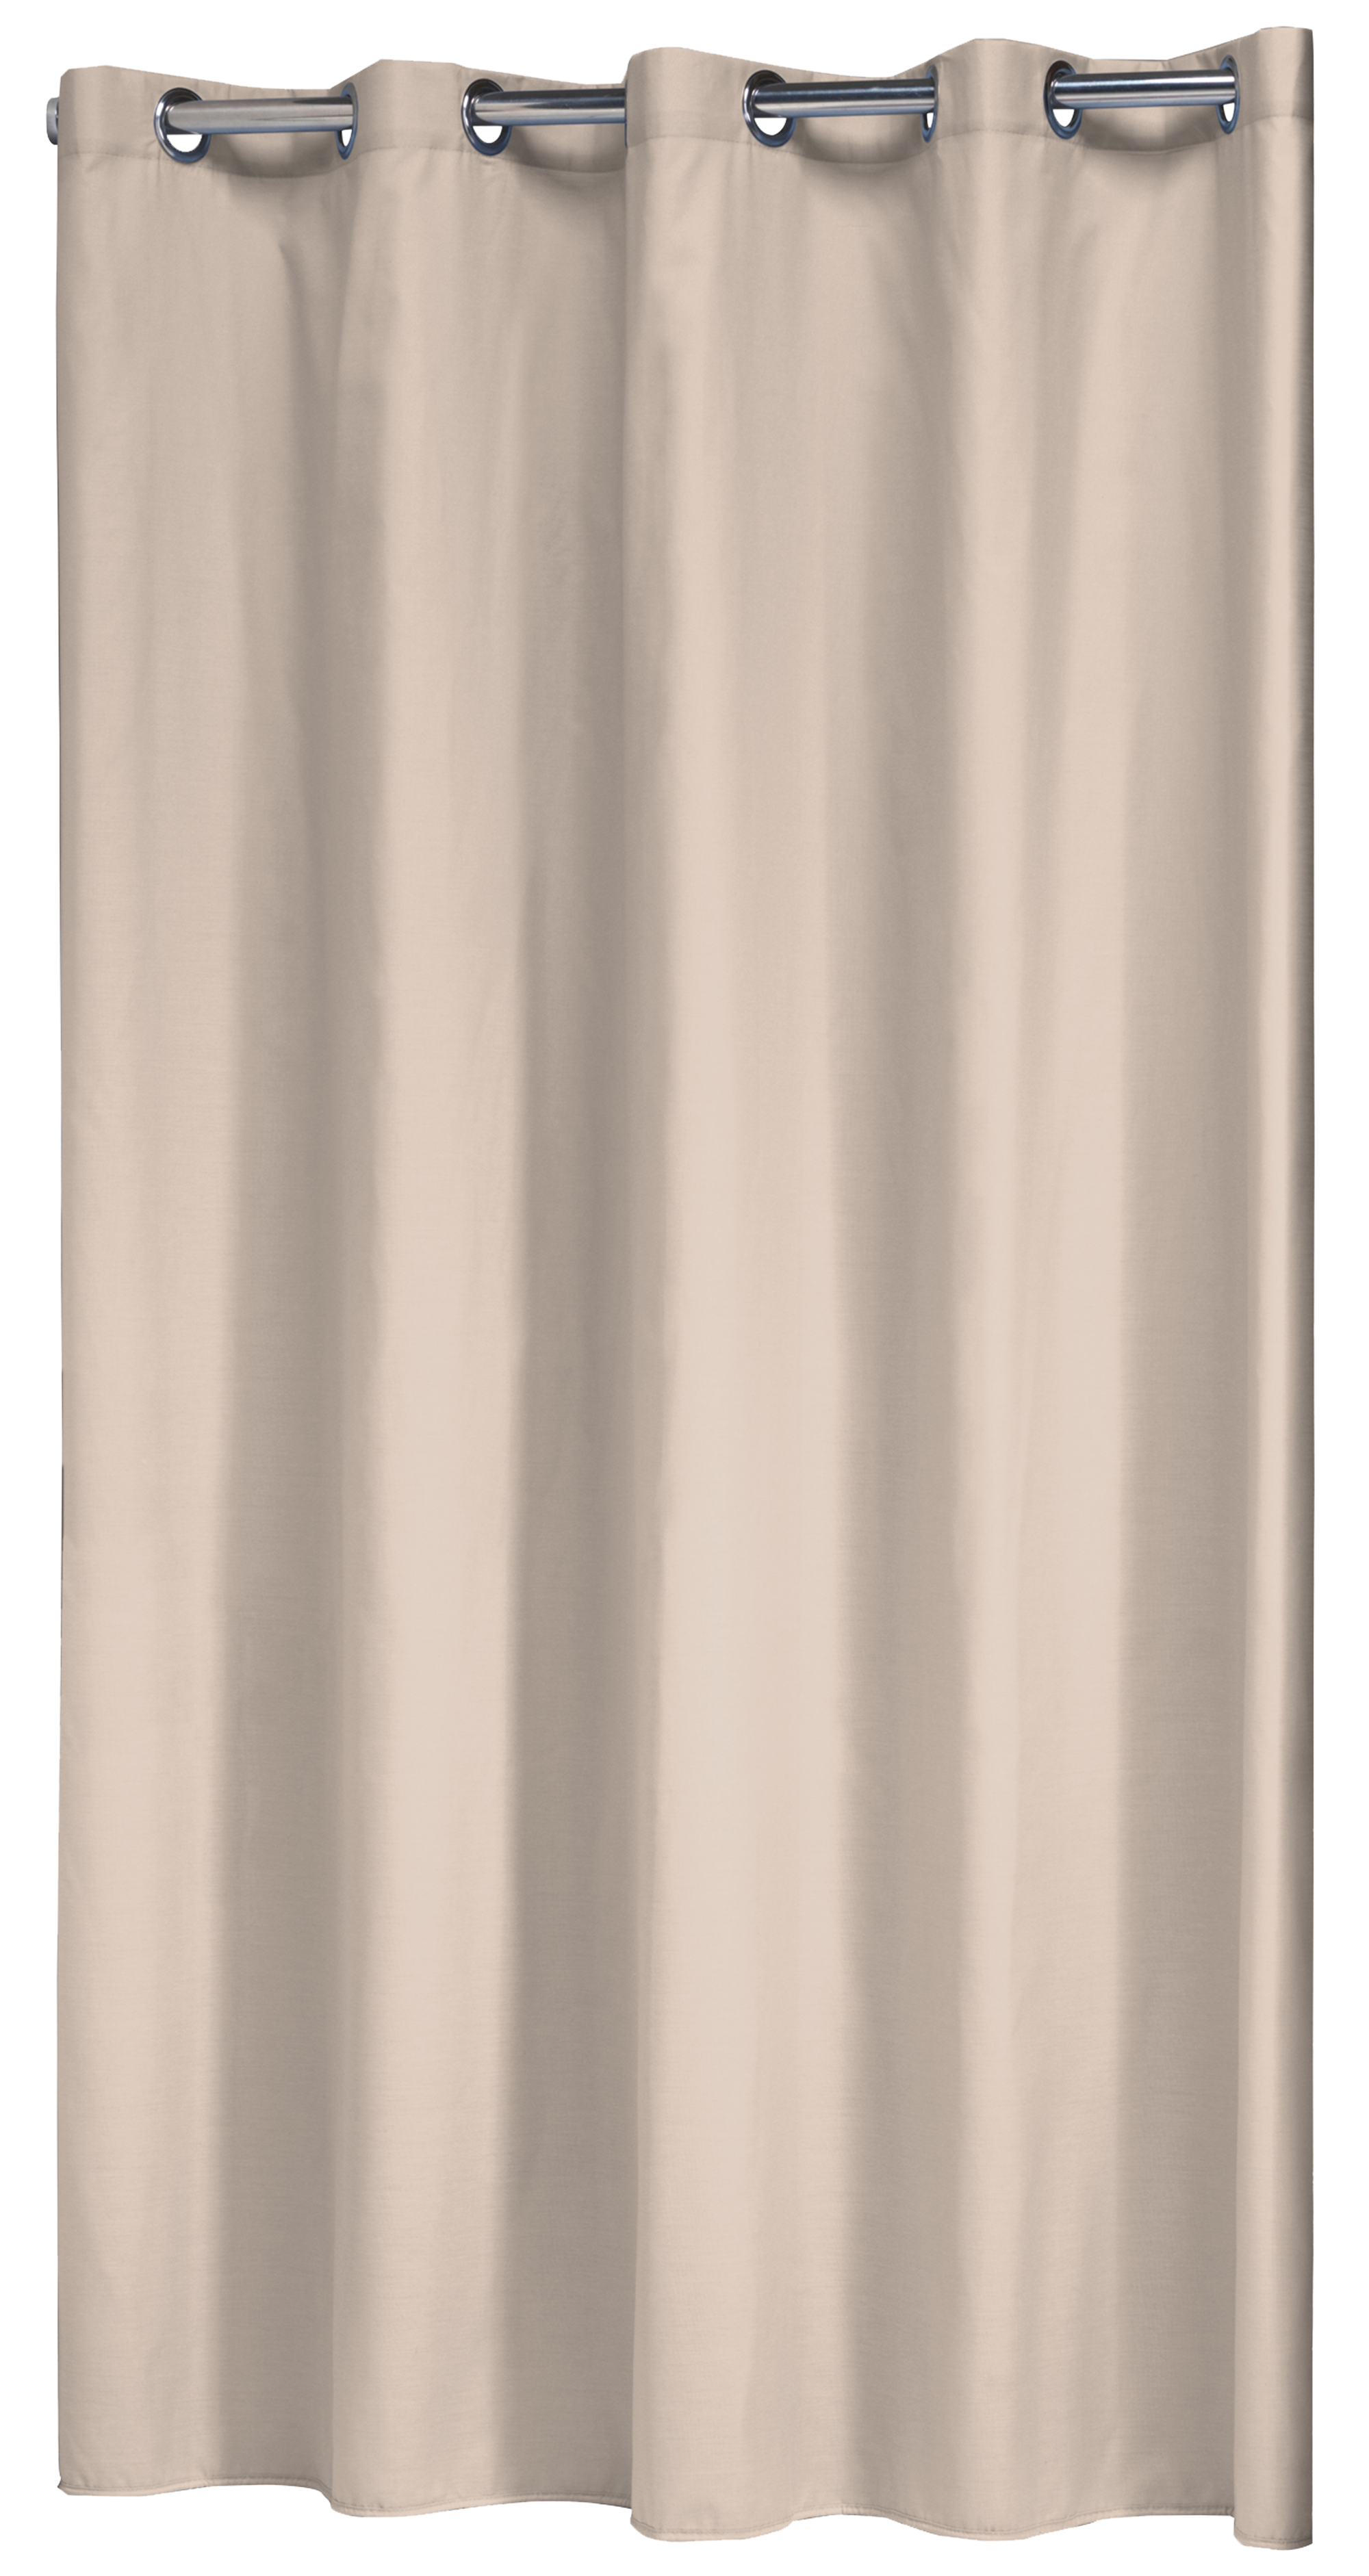 Cortina de baño coloris beige algodón+poliéster 180x200 cm